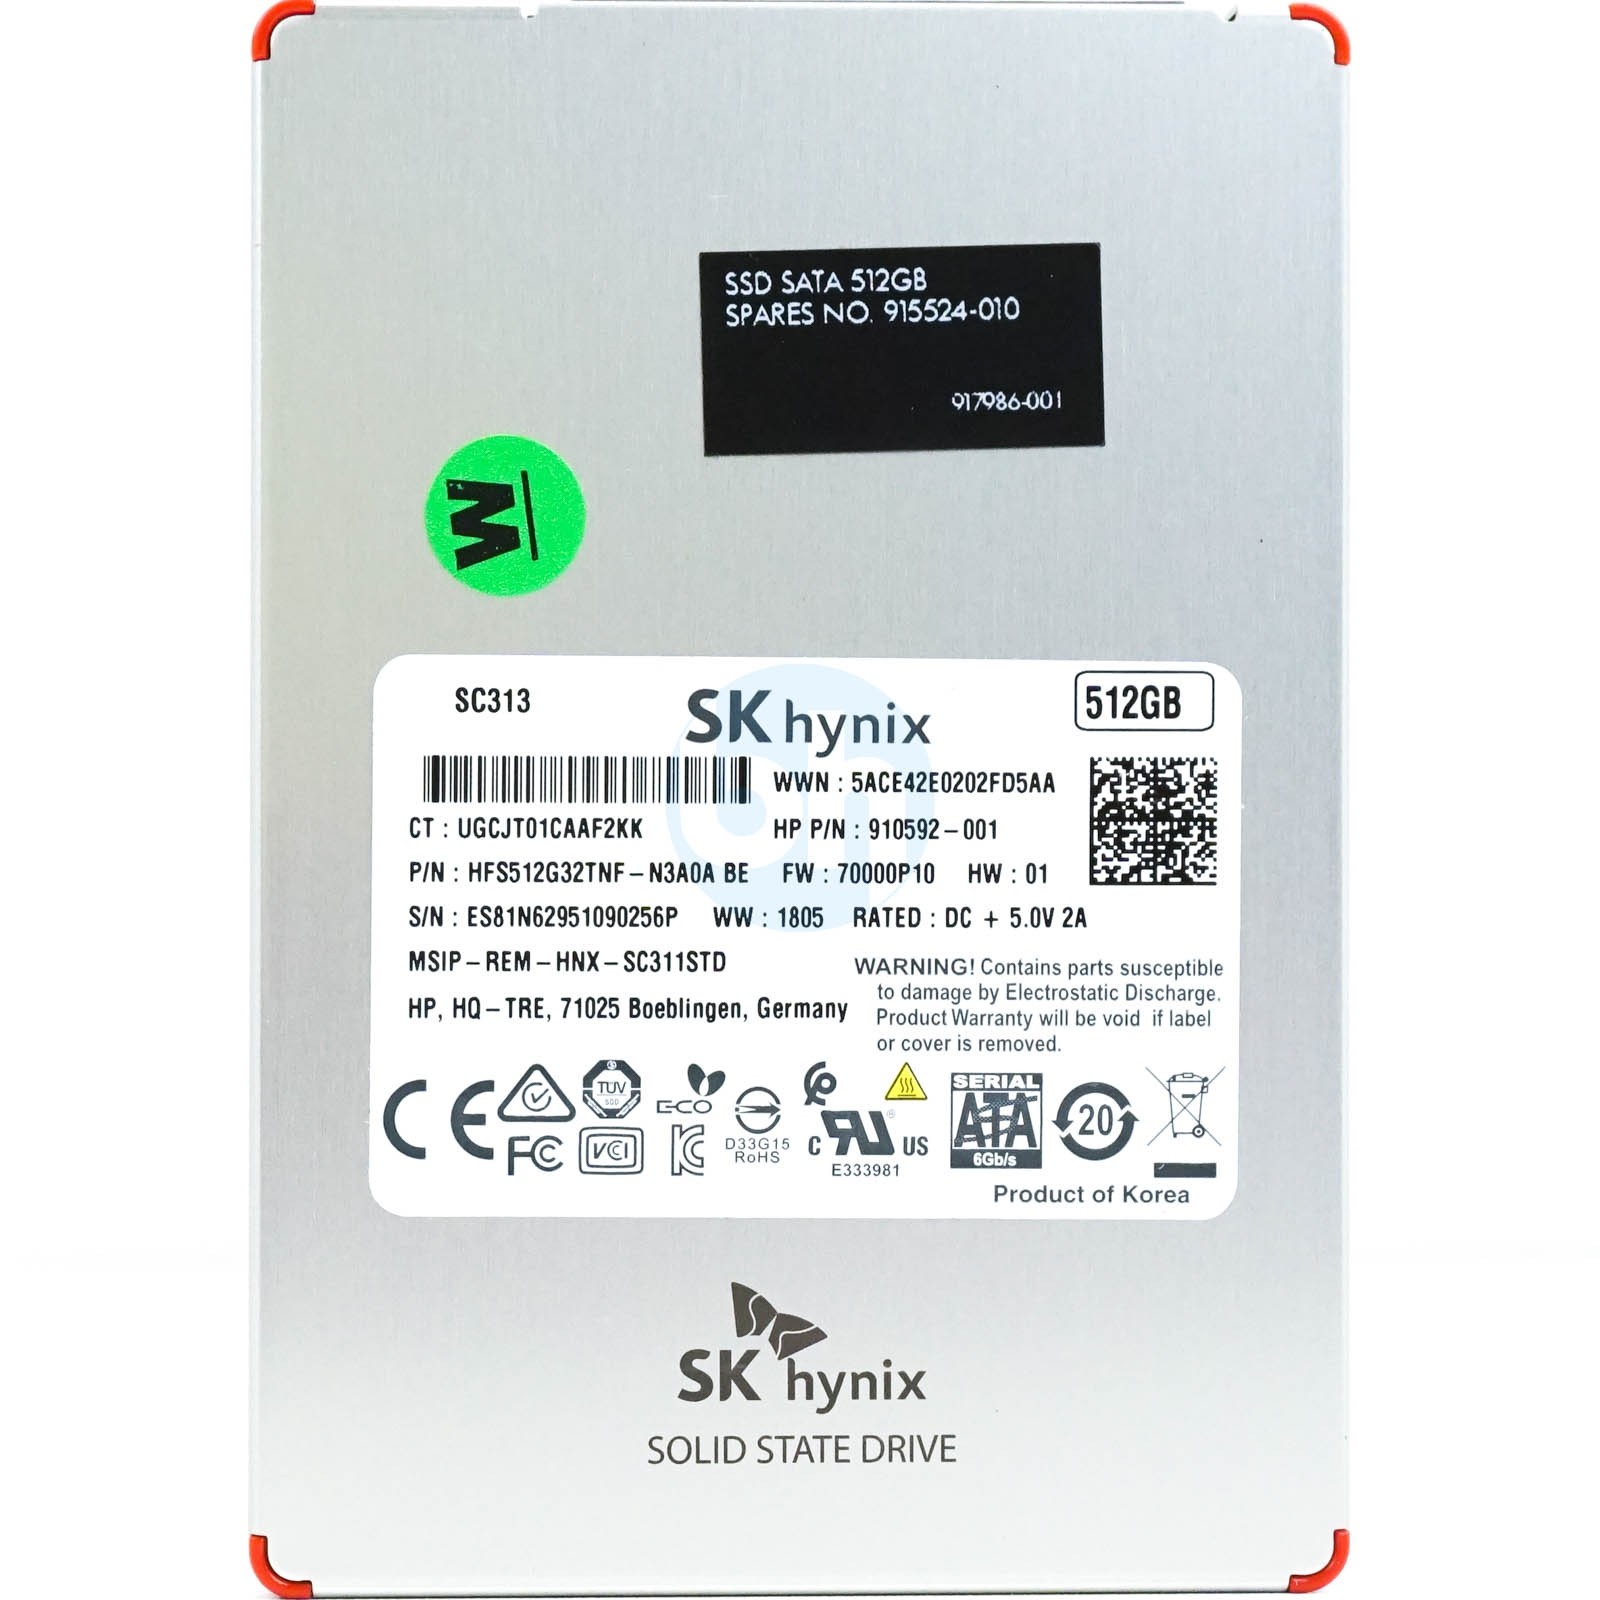 HP (910592-001) - 512GB SC311 (SFF 2.5in) SATA-III 6Gbps TLC SSD